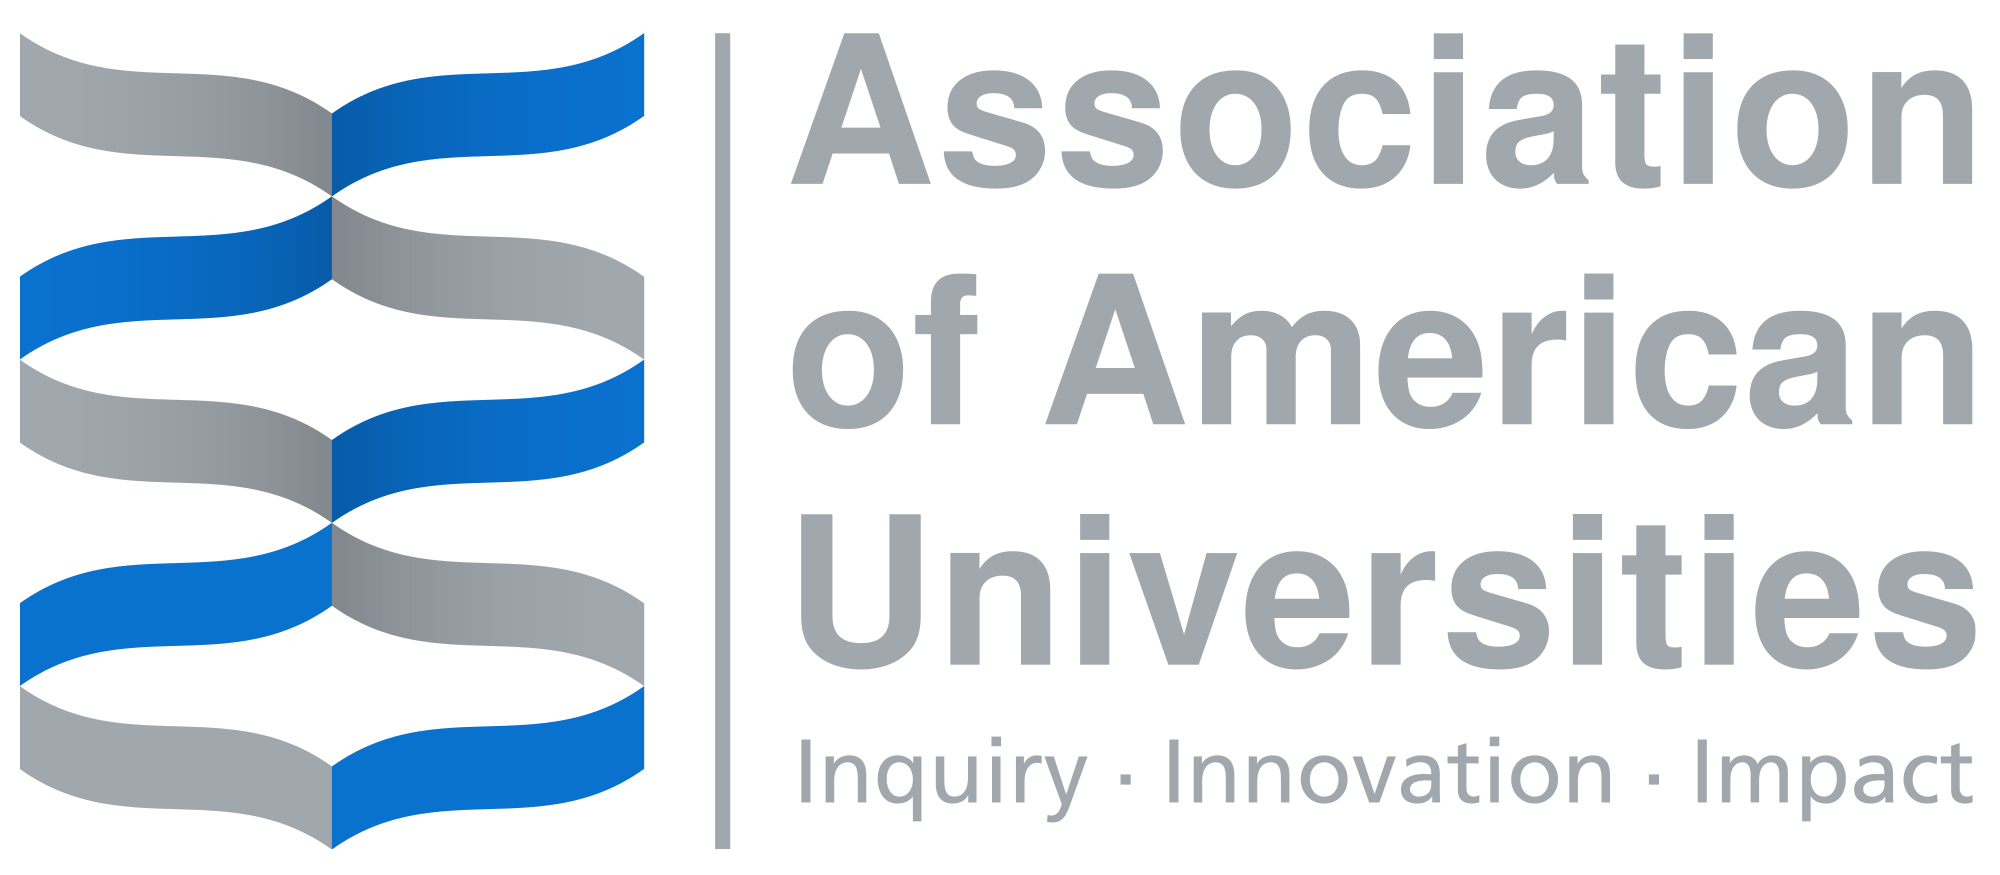 Universities Logo - AAU's Logo. Association of American Universities (AAU)